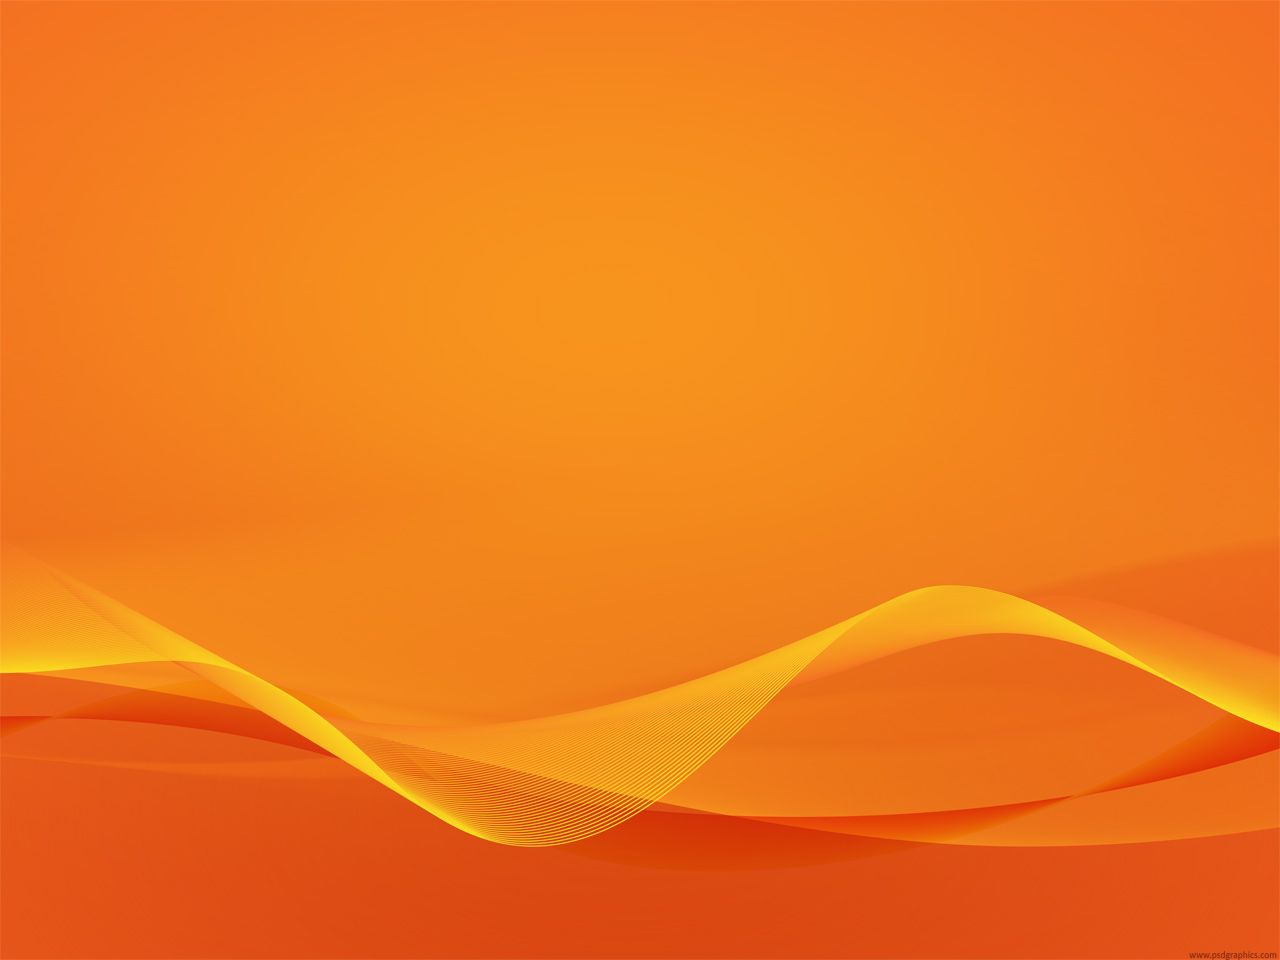 IMAGE | orange design background